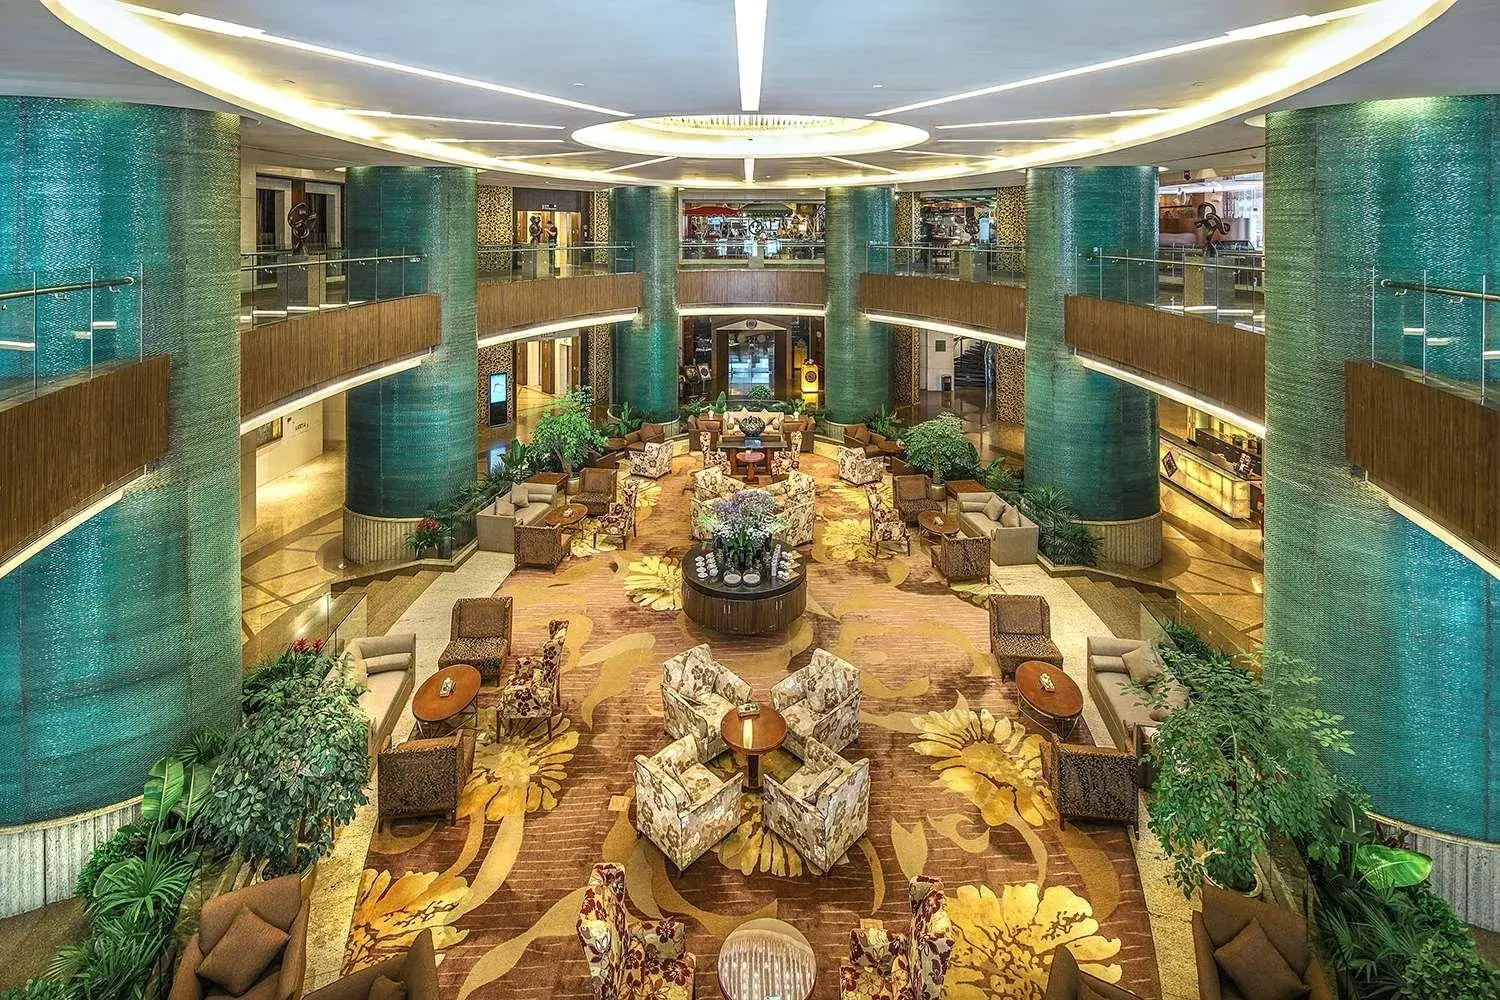 Lobby or reception in Kempinski Hotel Chengdu